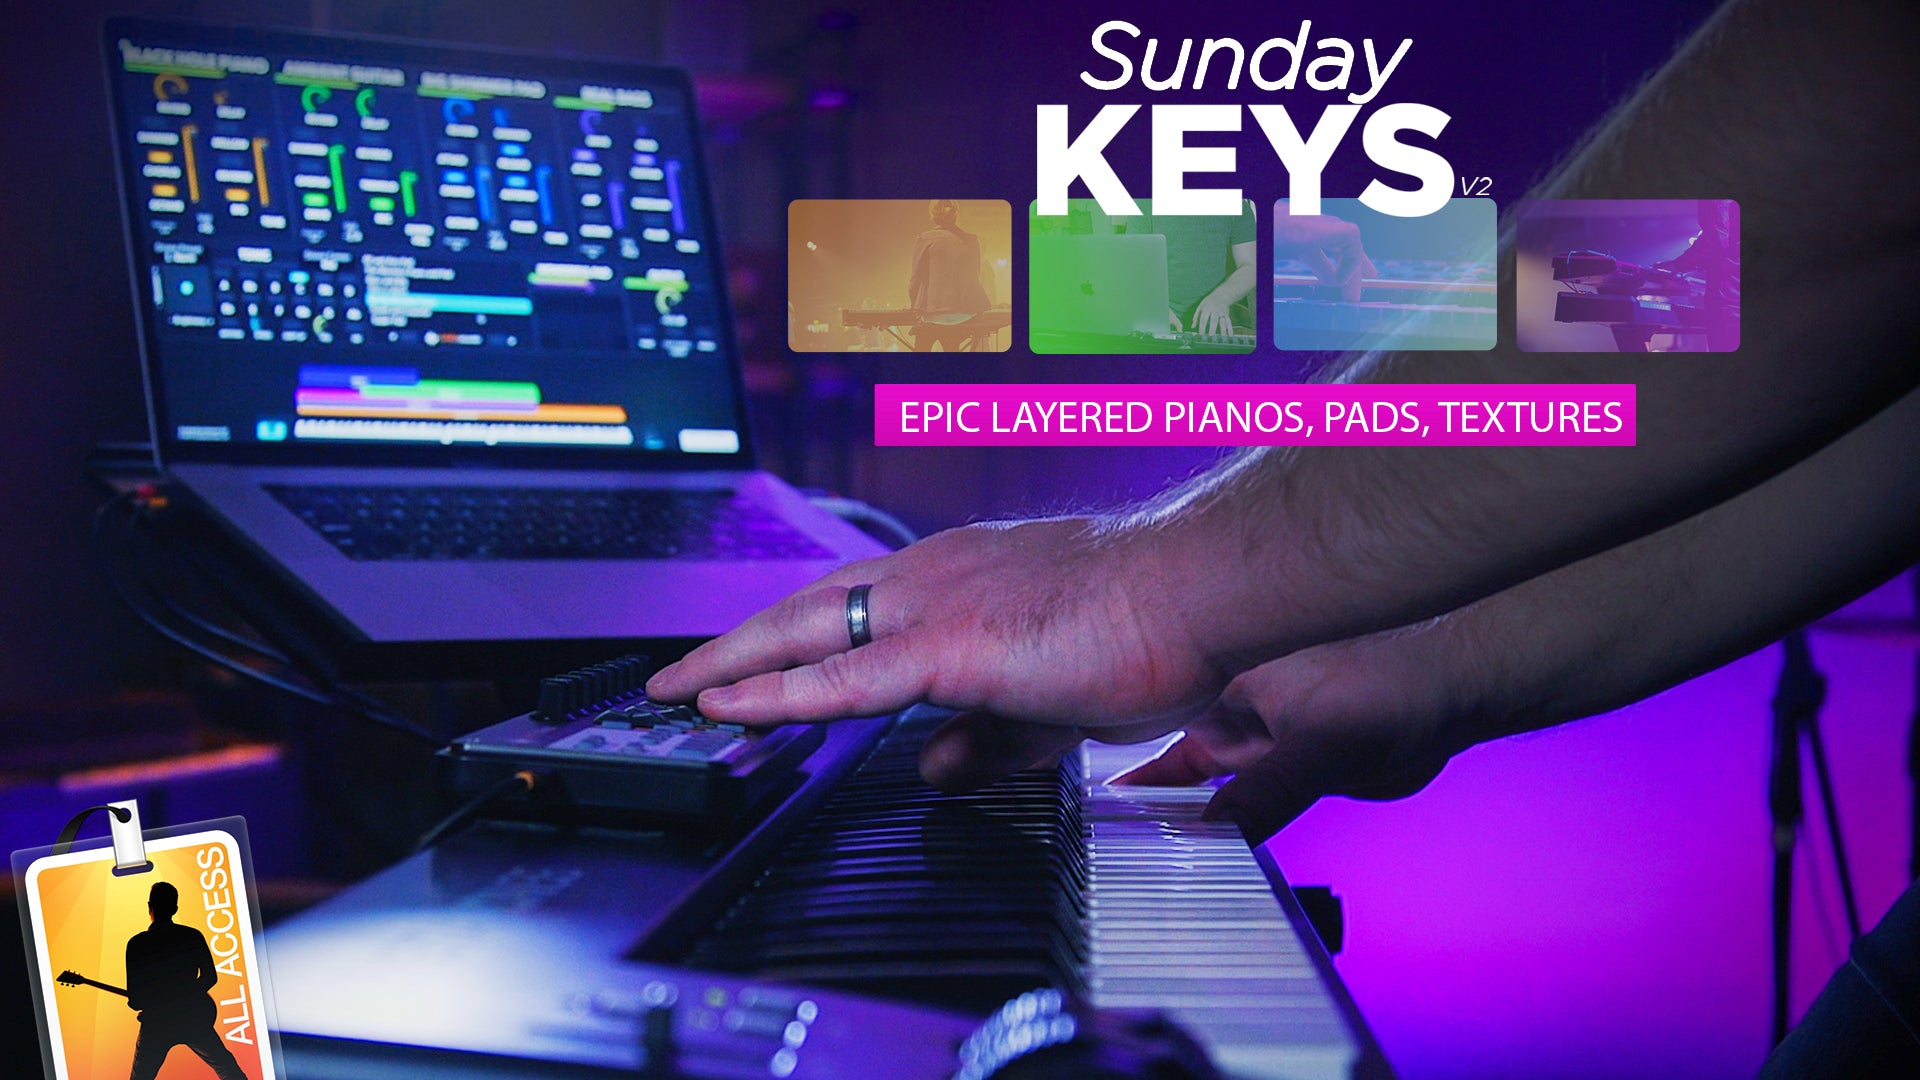 Epic Layered Pianos, Pads, Textures Demo - Sunday Keys Version 2